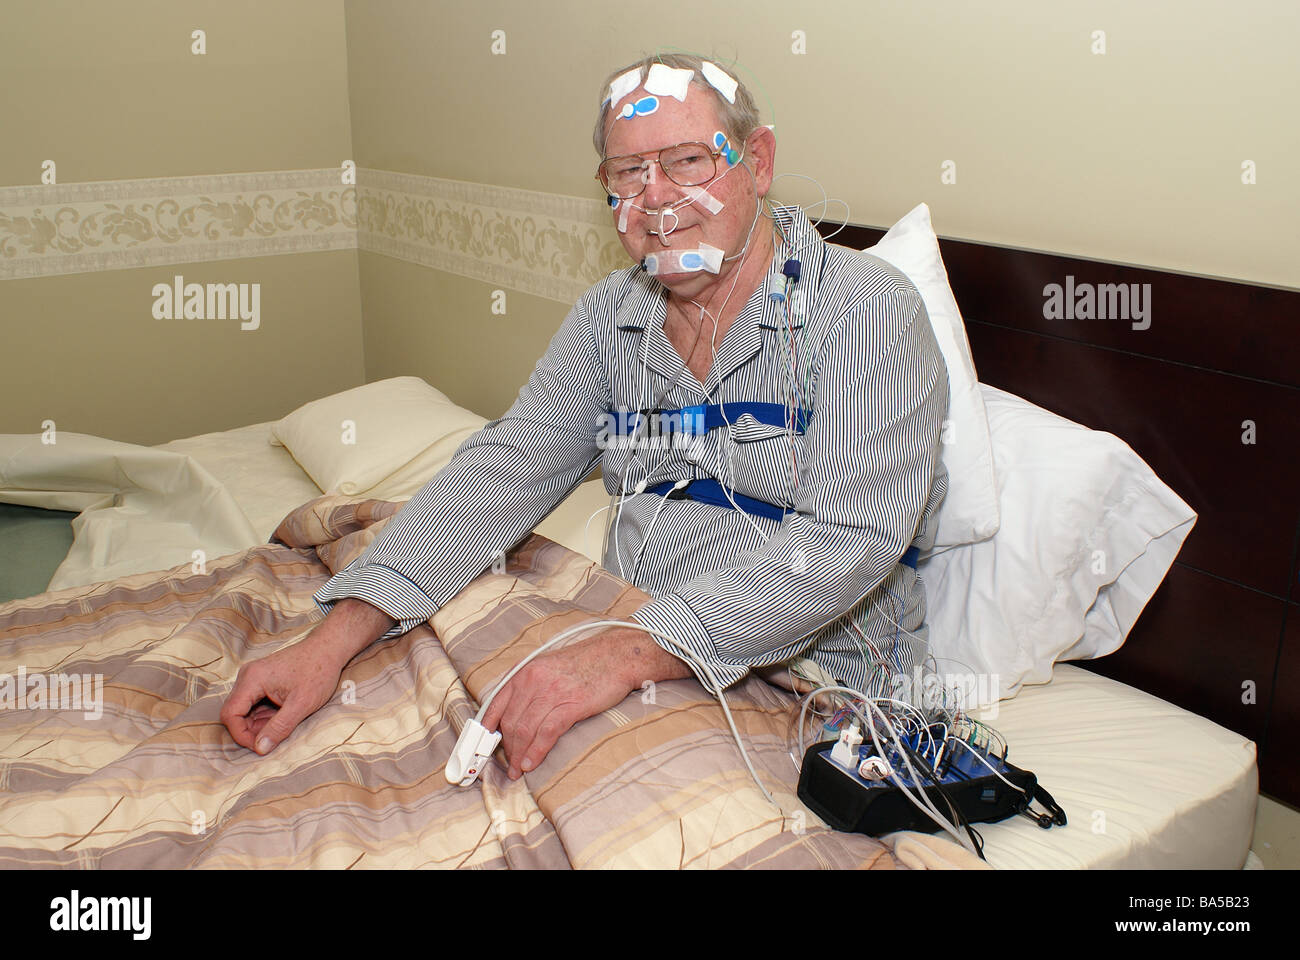 Sleep apnea evaluation hi-res stock photography and images - Alamy